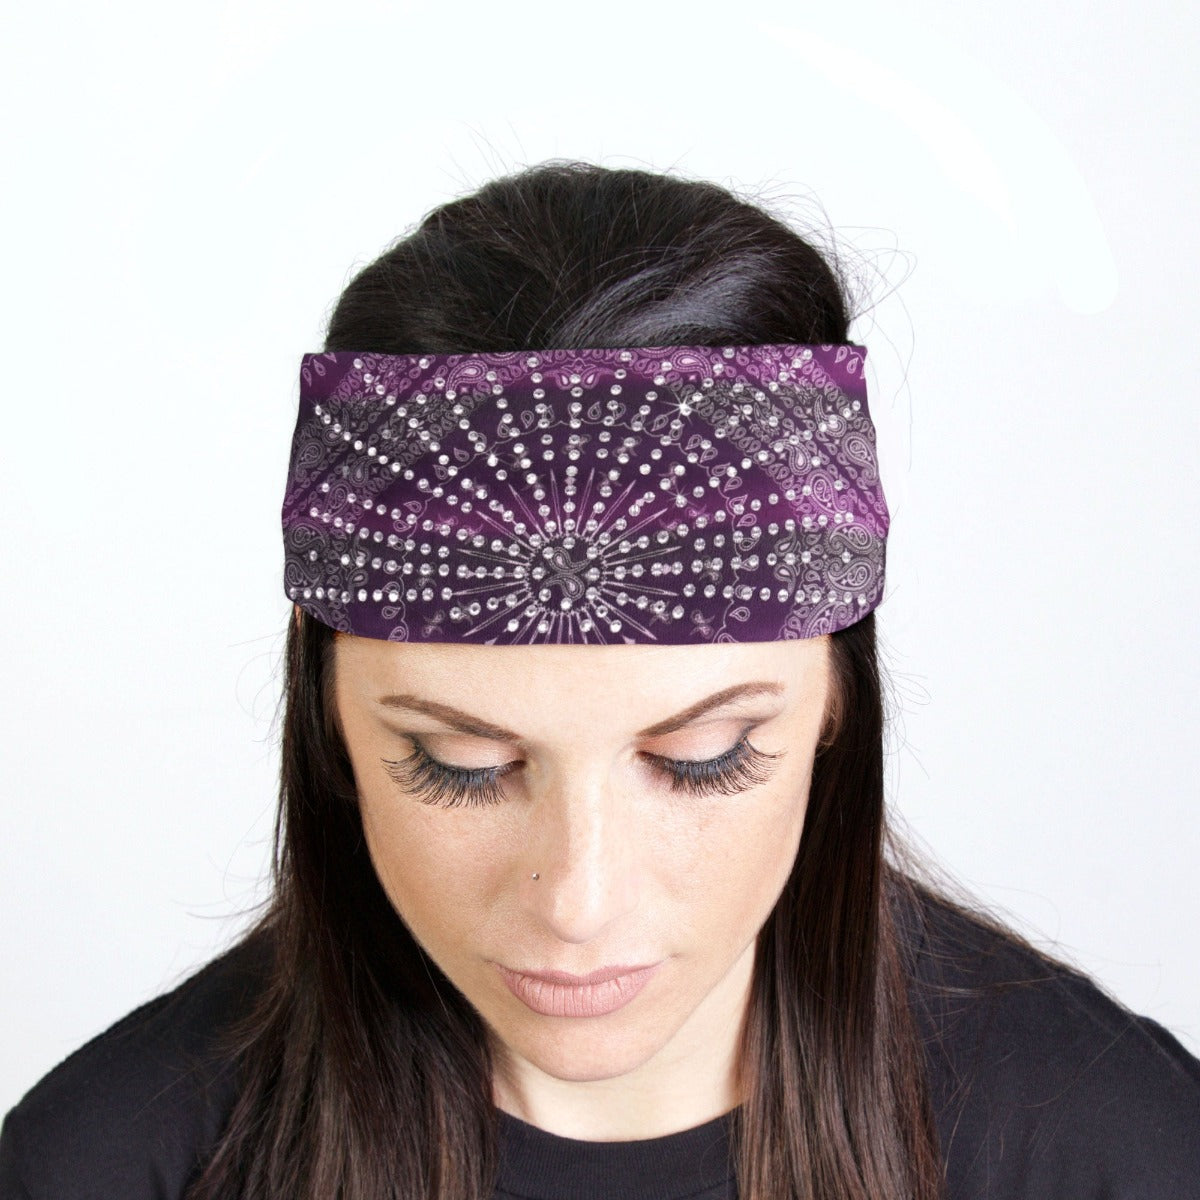 Hot Leathers Bandana Headband Wraps w/Rhinestones, Purple